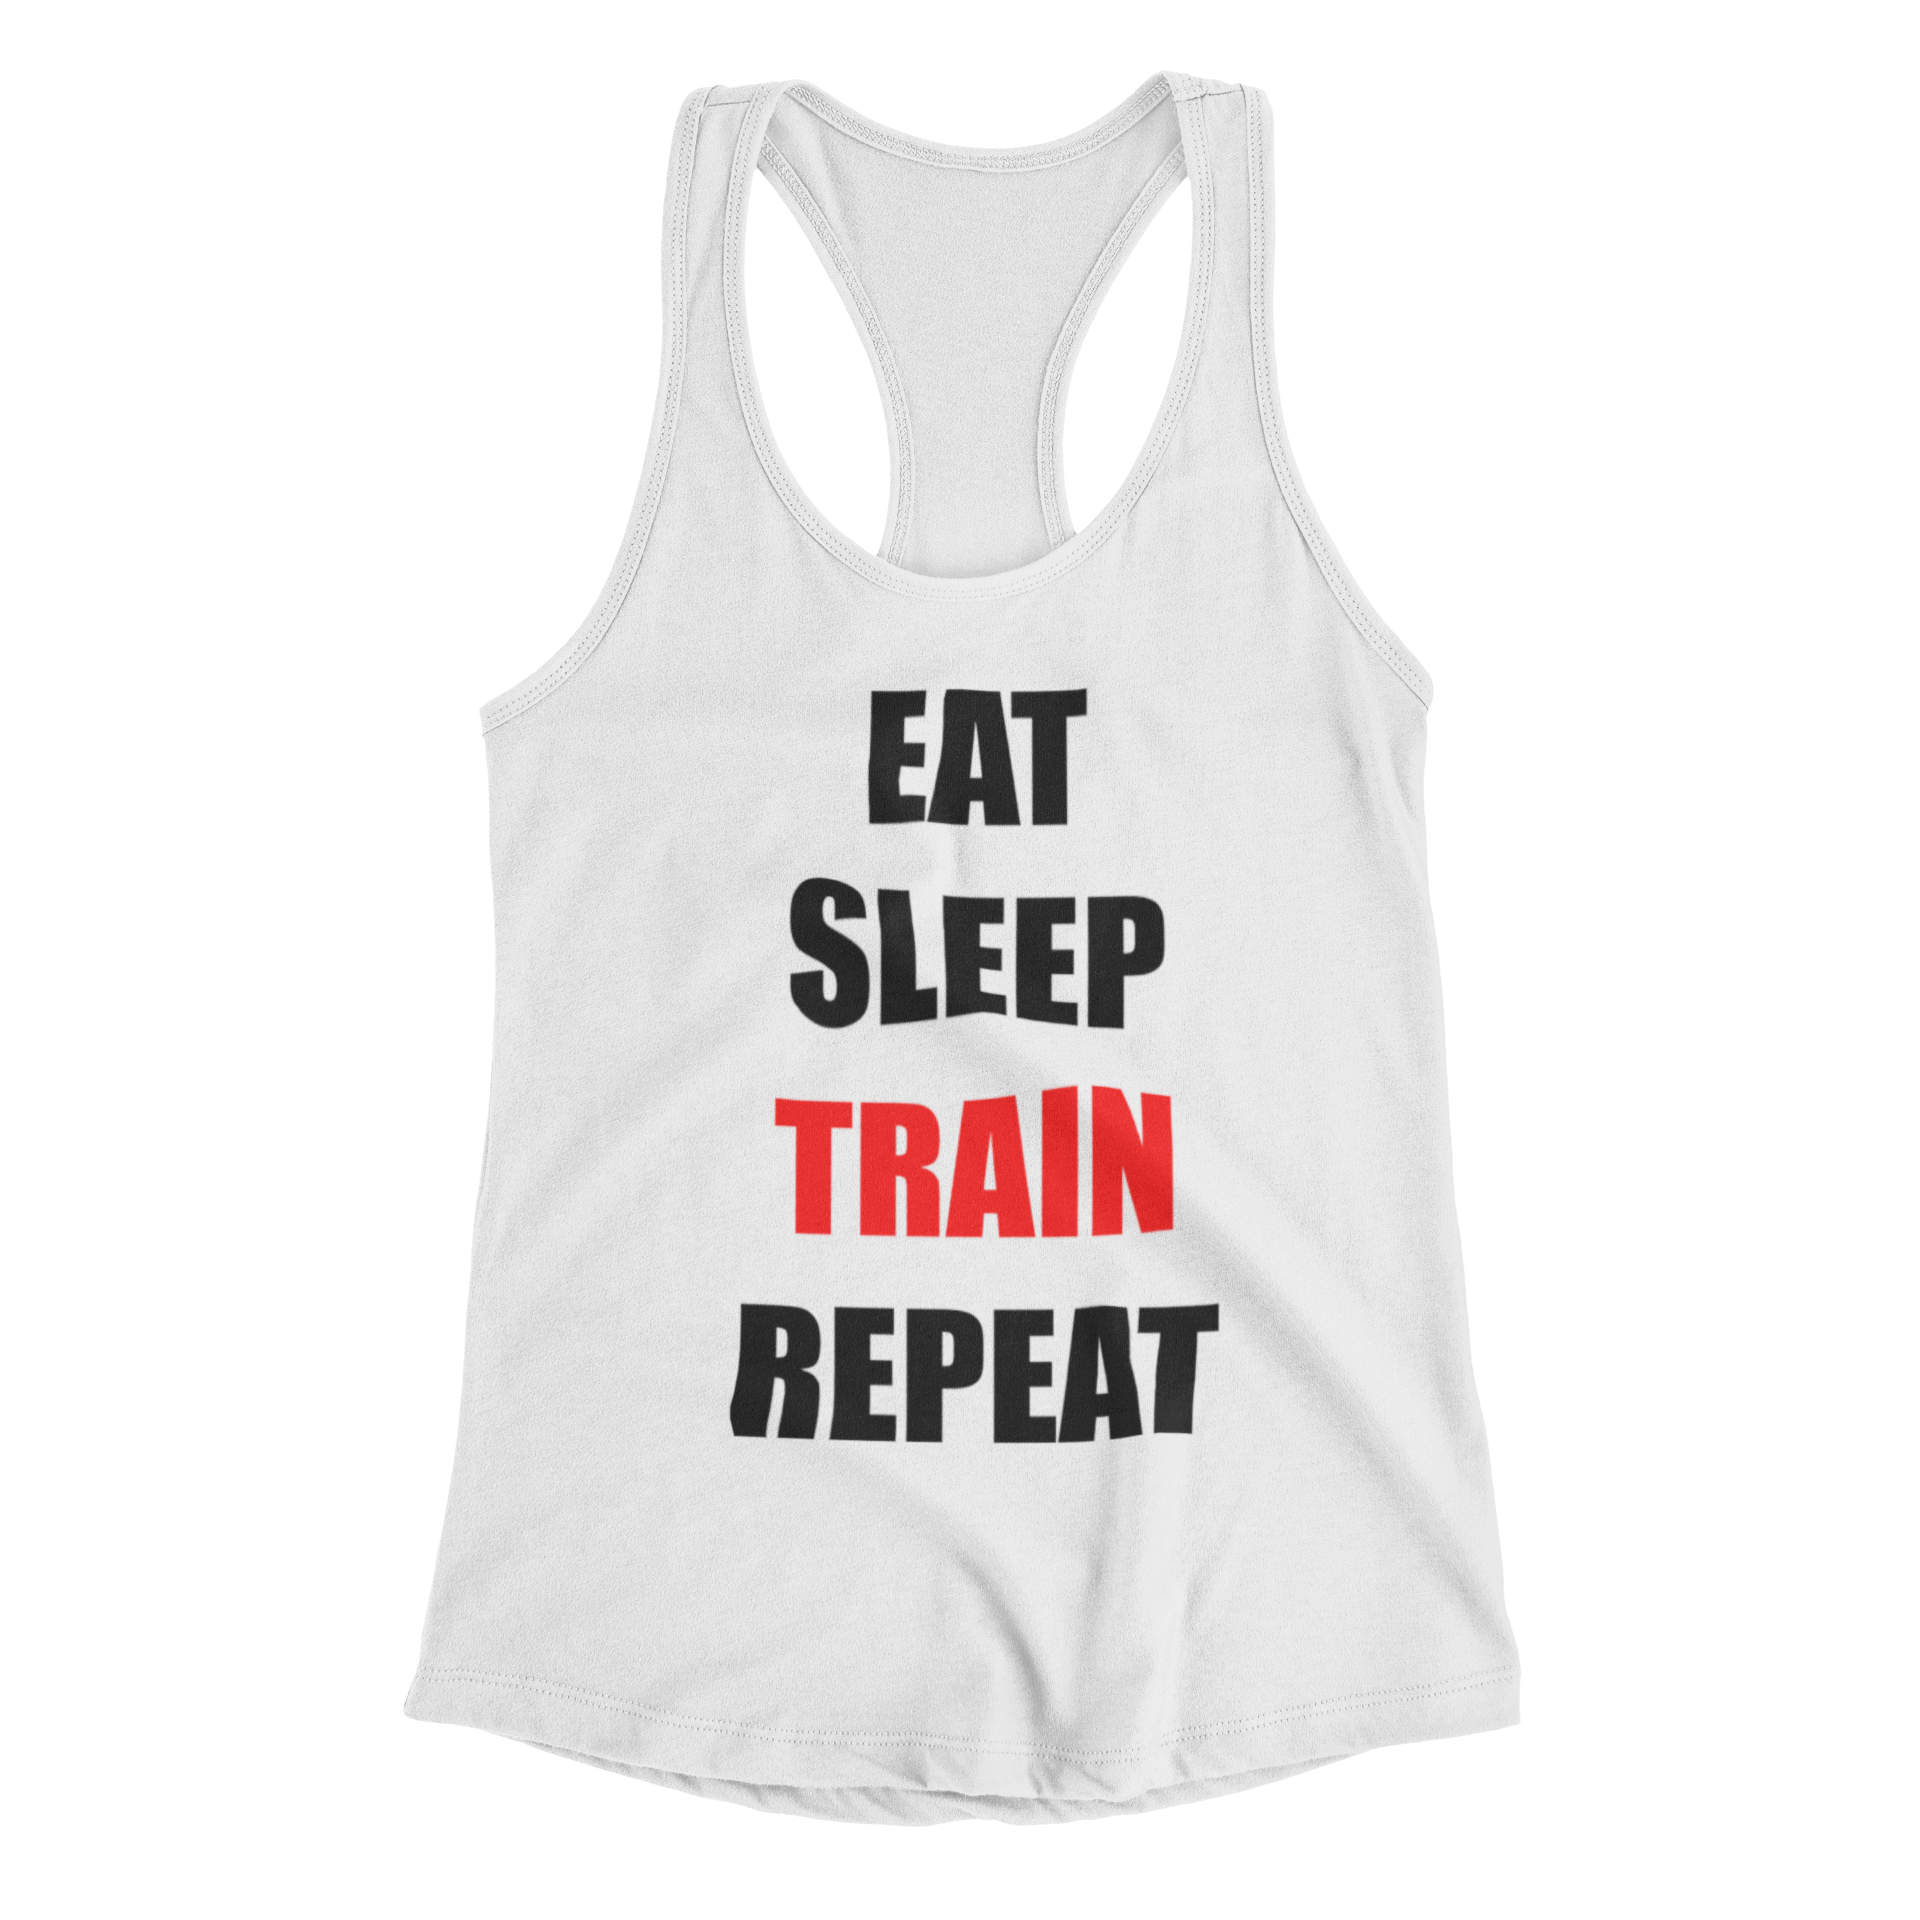 T-shirts - Eat Sleep Train Repeat White Racerback T-Shirt - 3X-Large ...